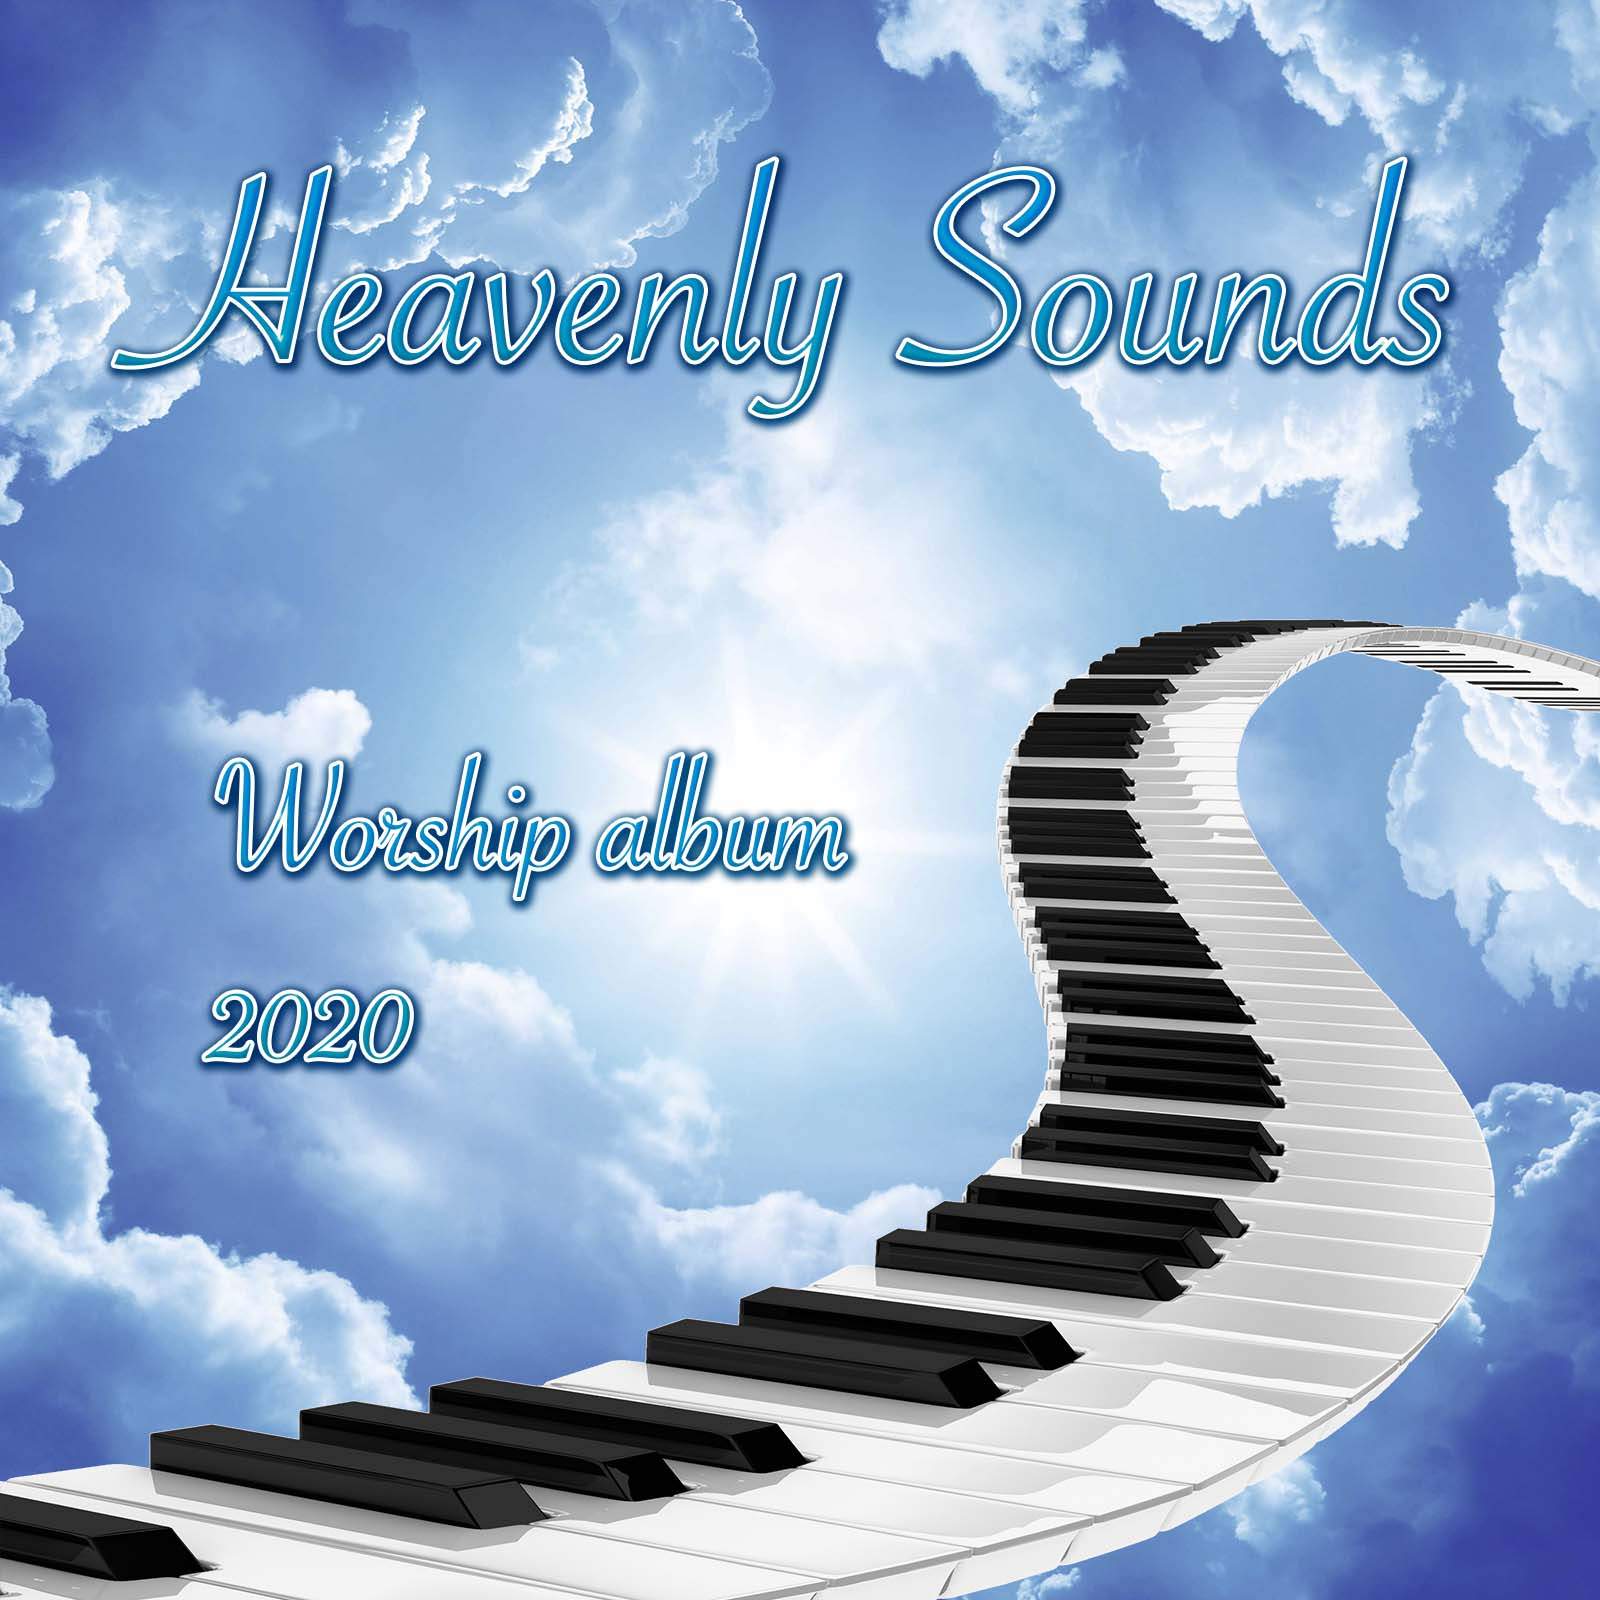 Heavenly Sounds – Worship album (2020)